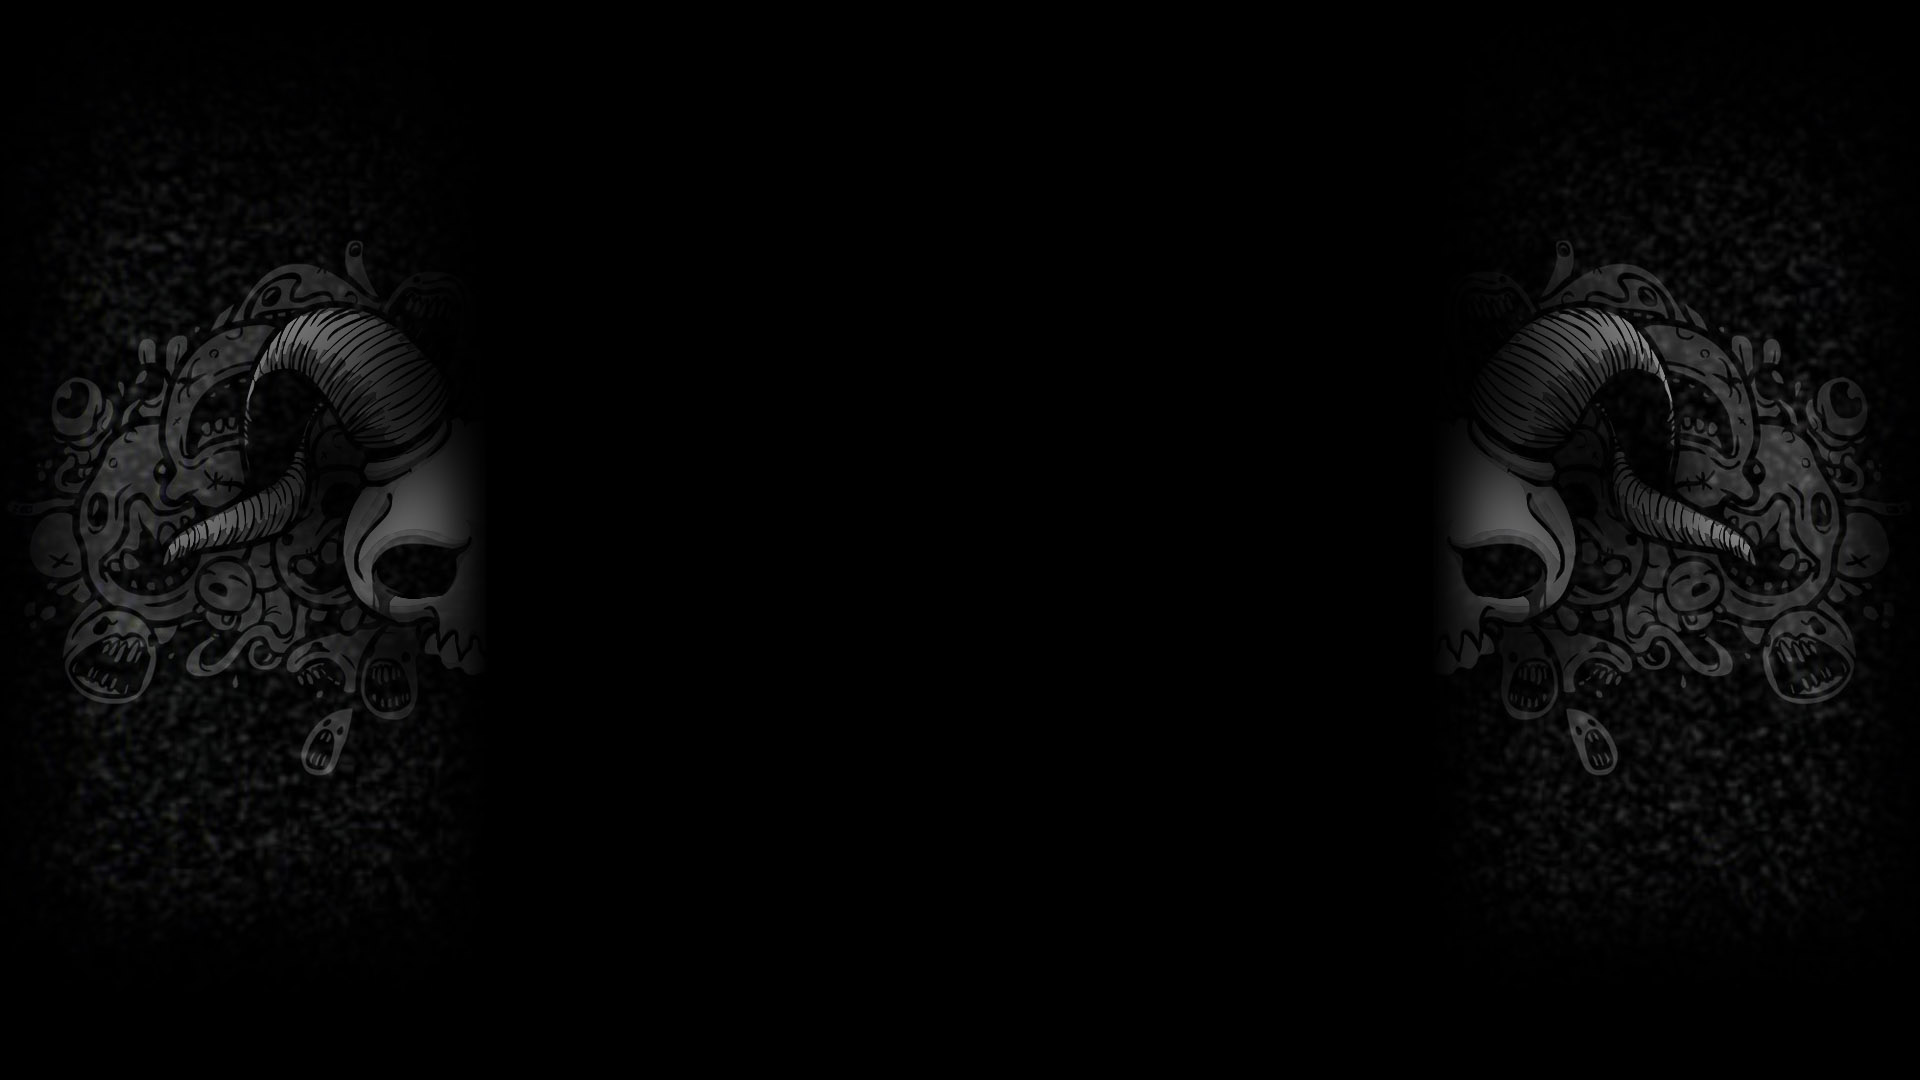 General 1920x1080 black background minimalism digital art skull spooky dark monochrome